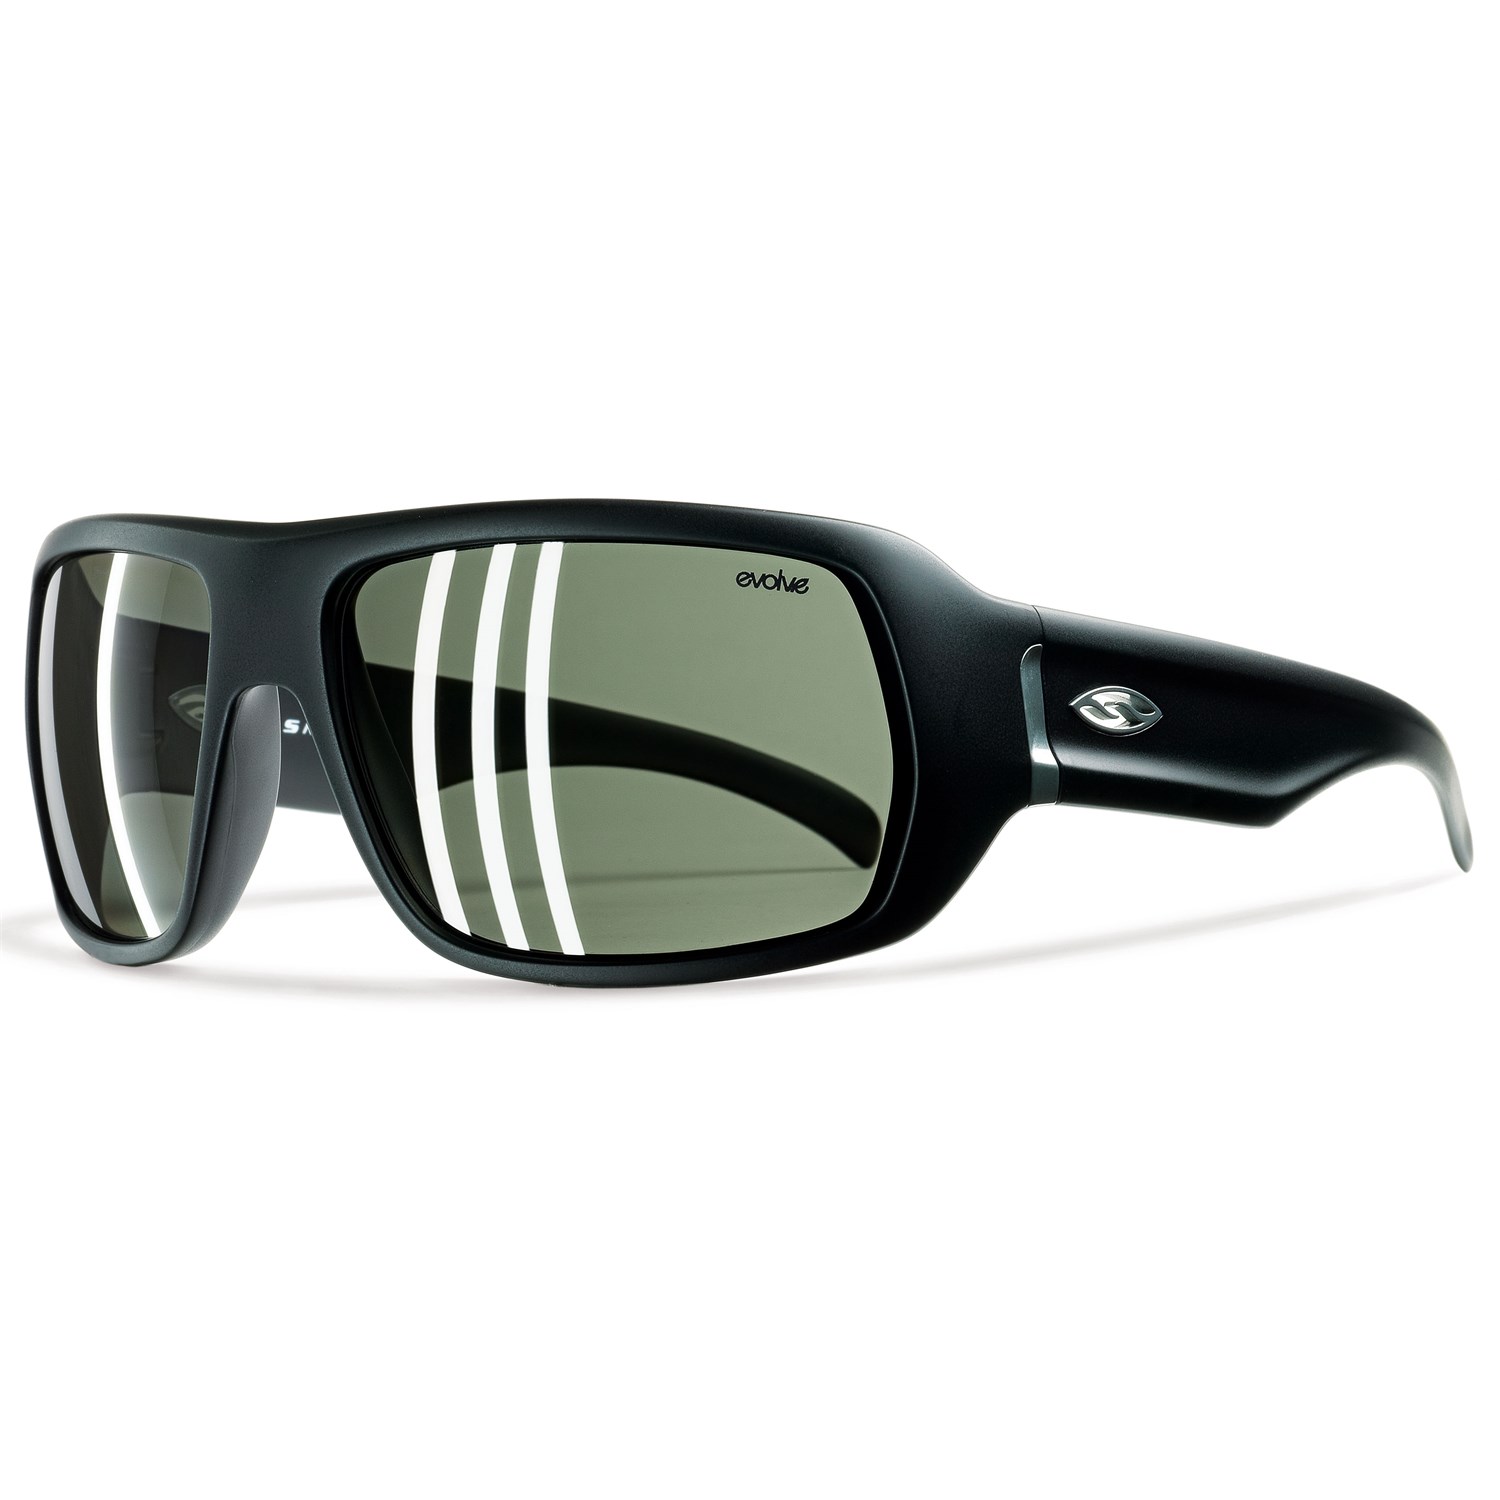 trechter Reproduceren limiet Smith Vanguard Polarized Sunglasses | evo